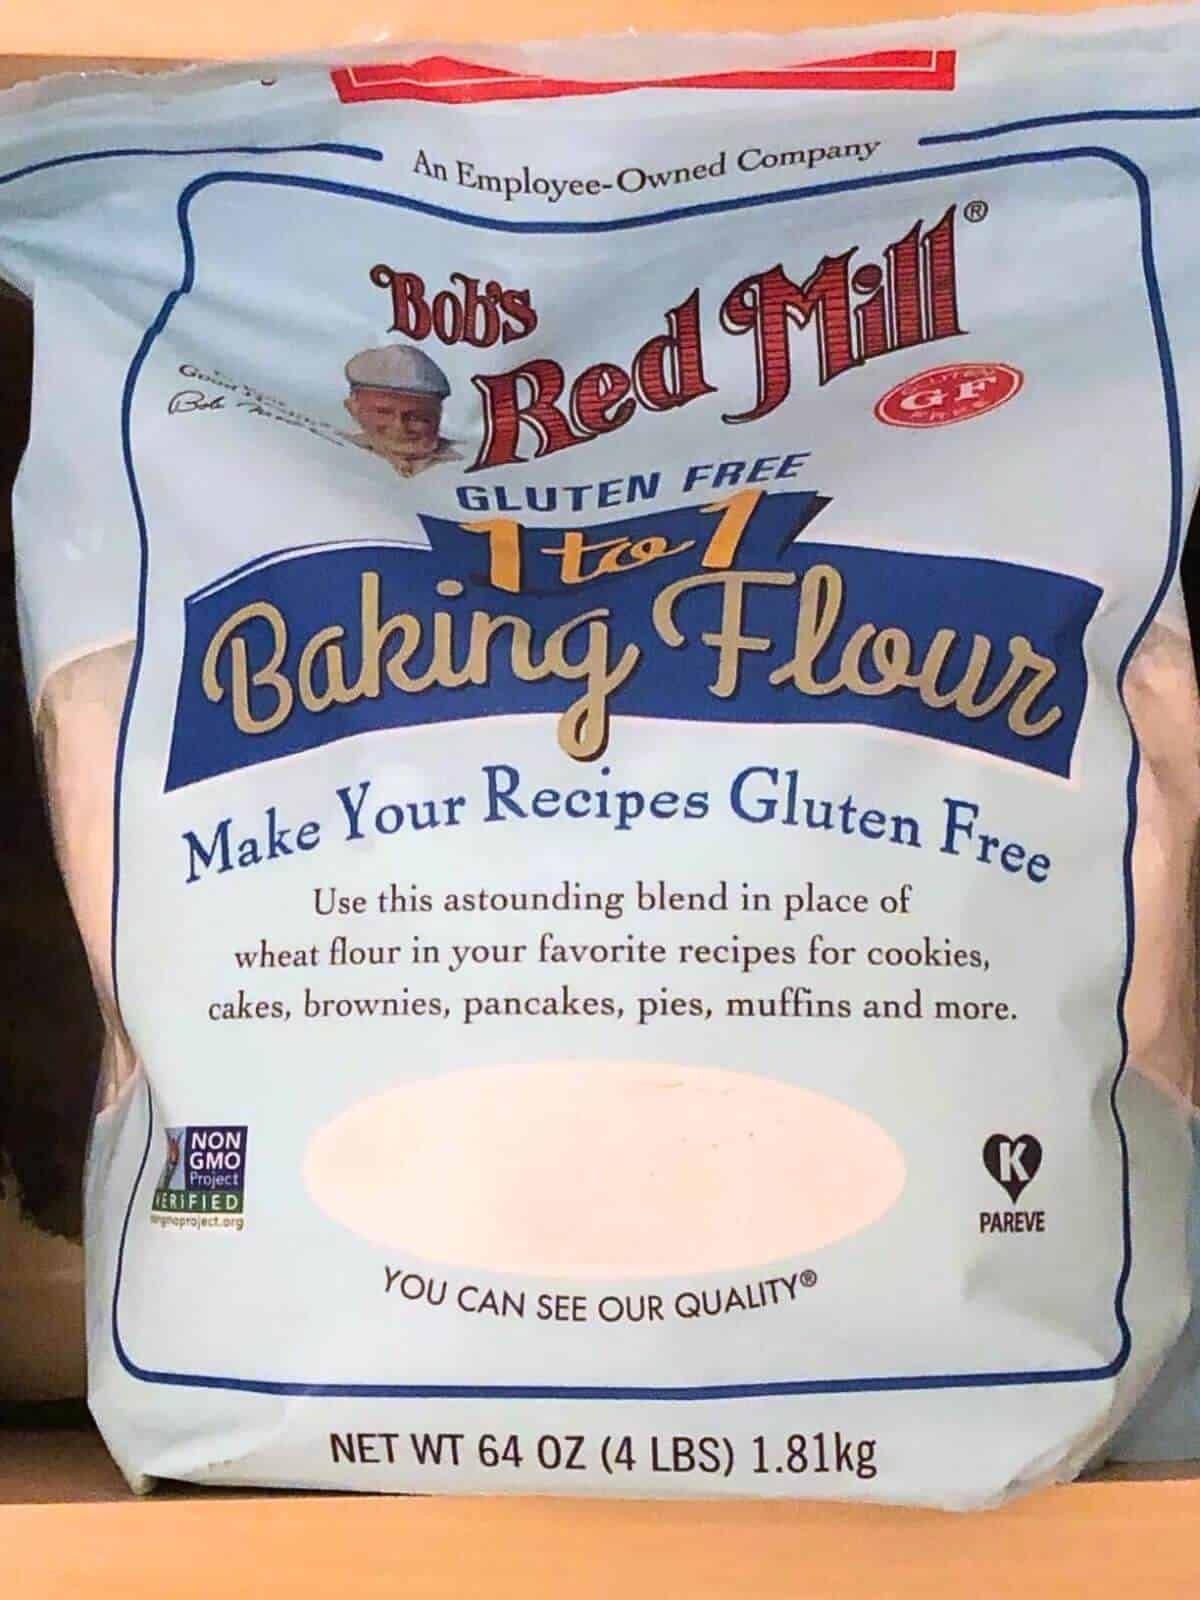 A bag of Bob's Red Mill gluten free baking flour.